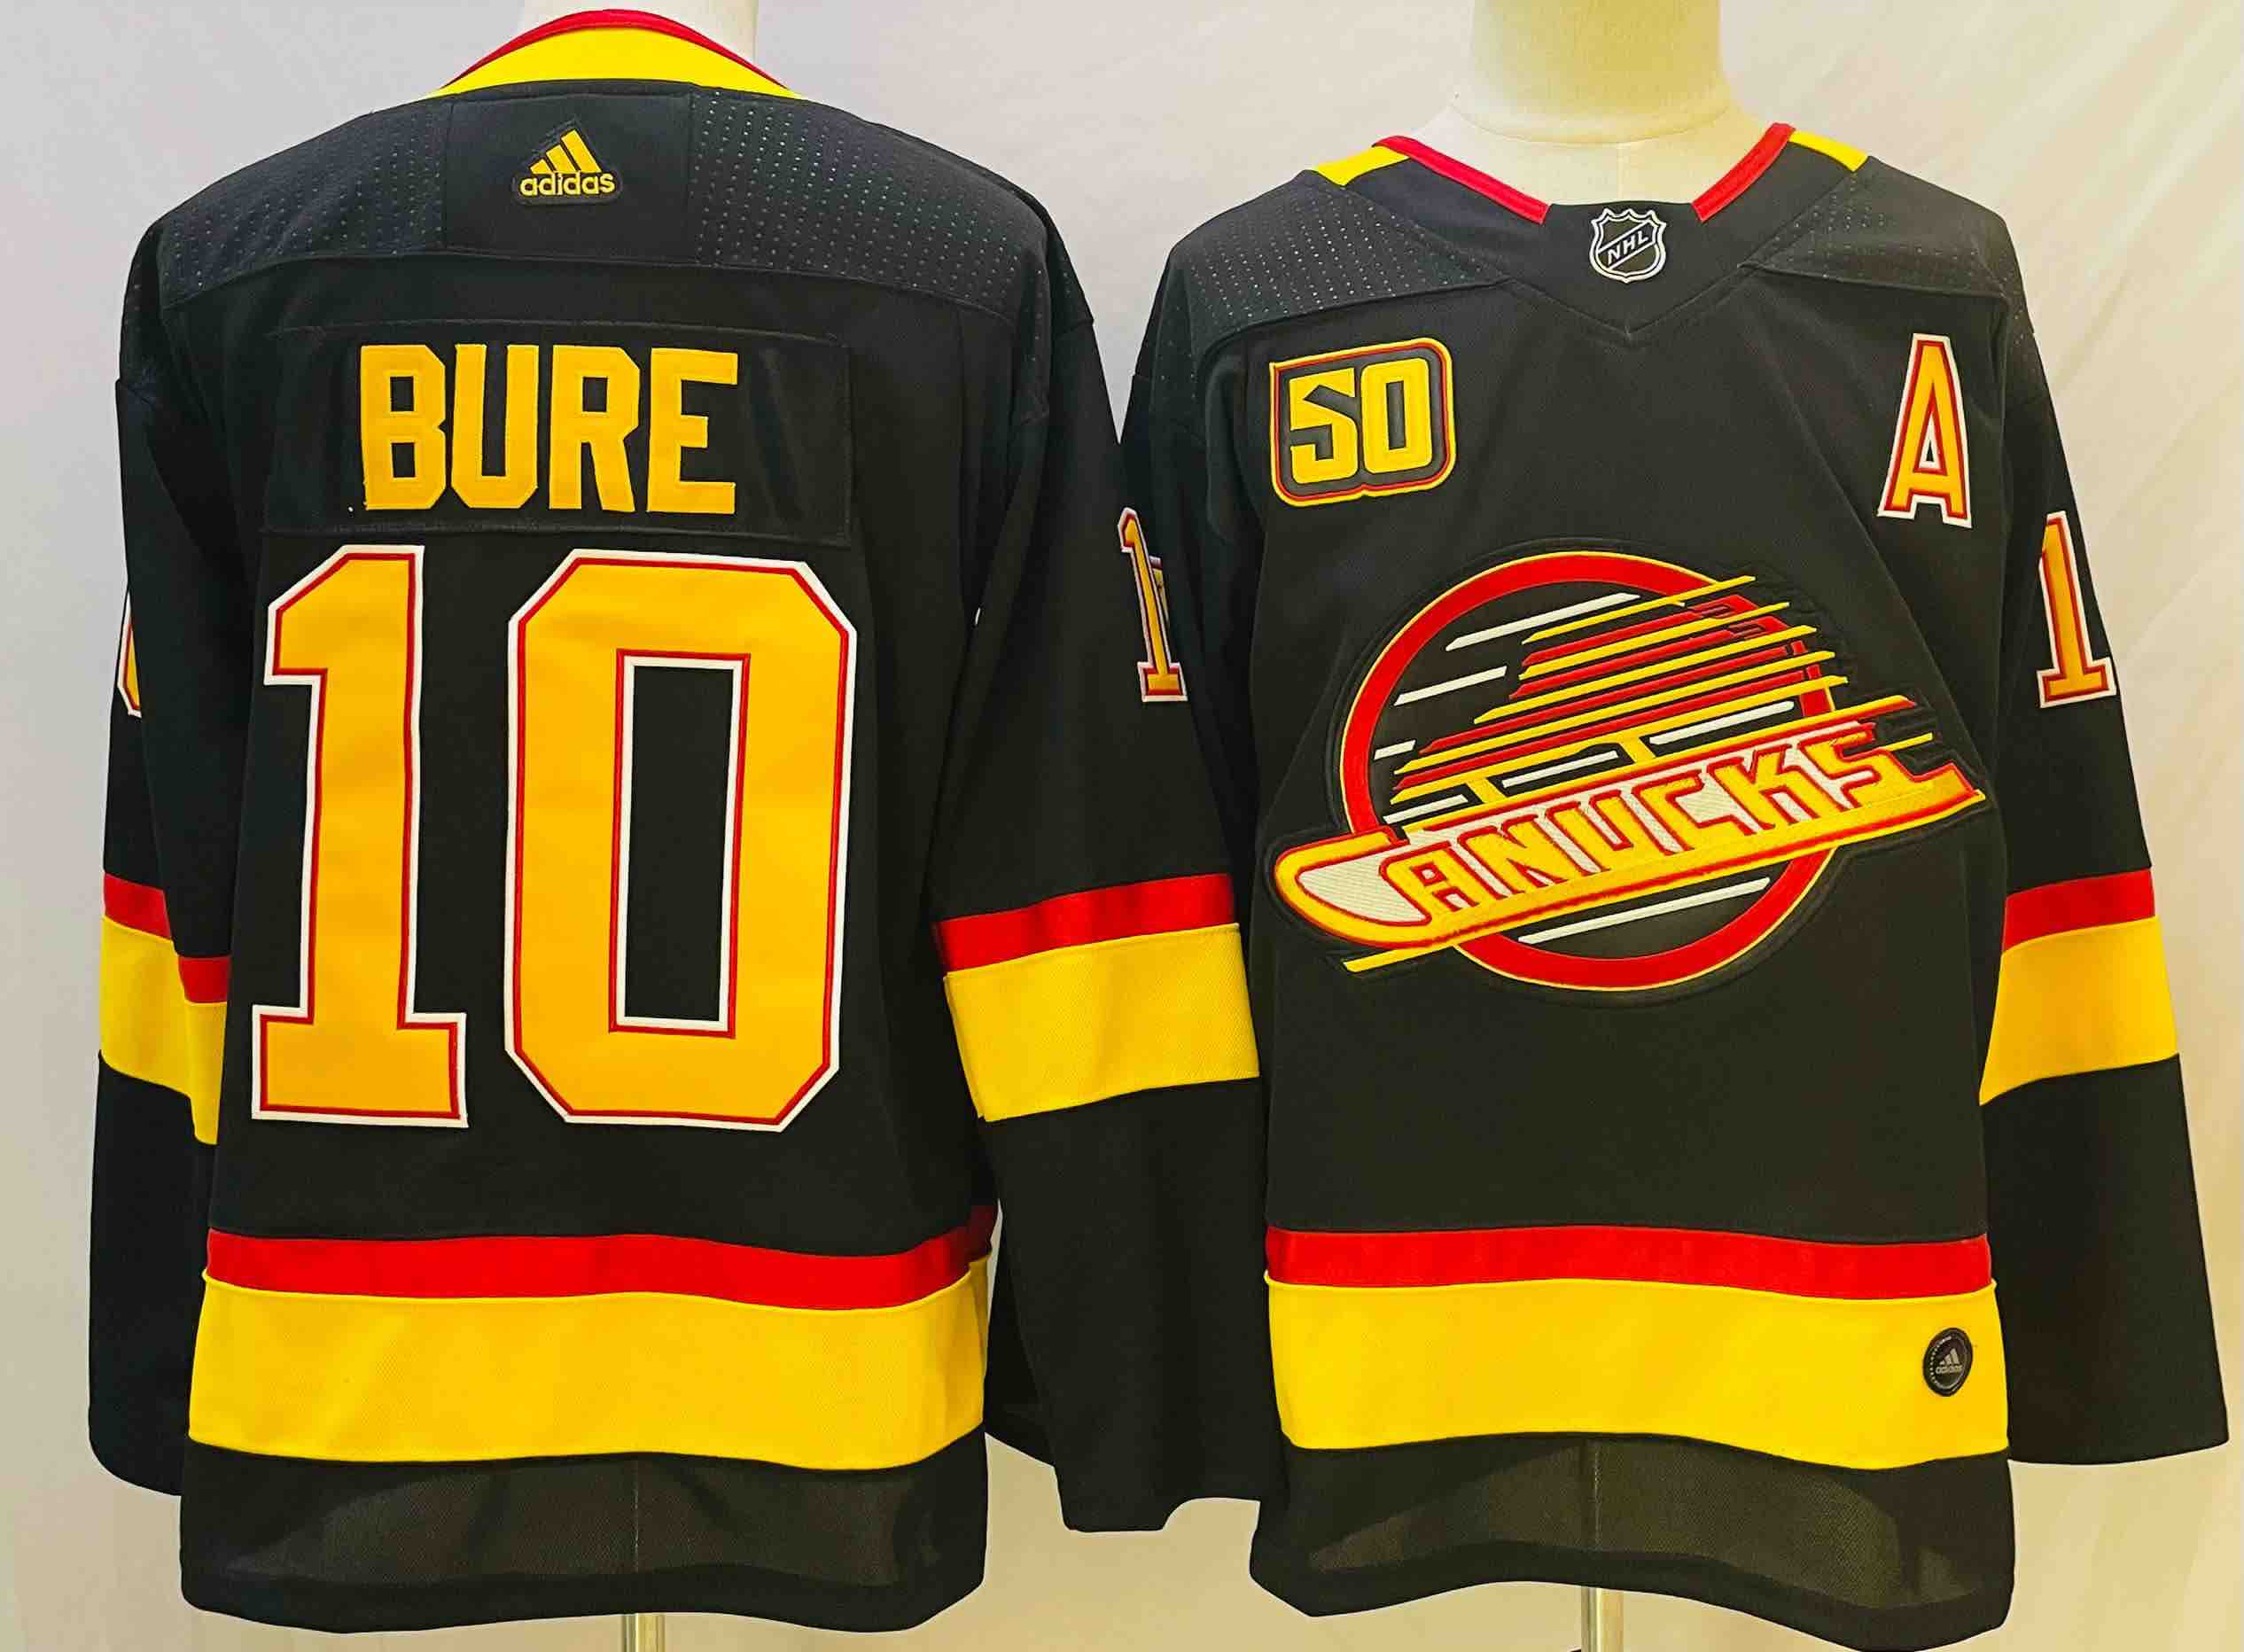 NHL Vancouver Canucks #10 Bure Black Jersey